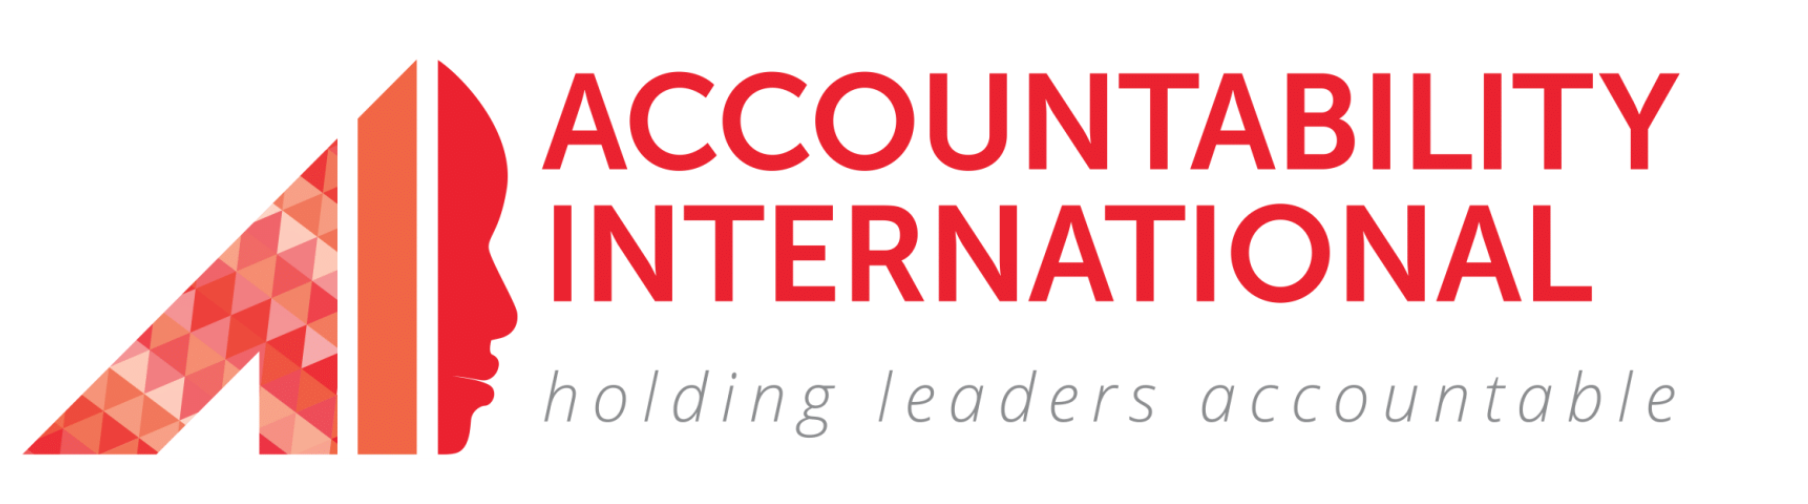 Accountability International 